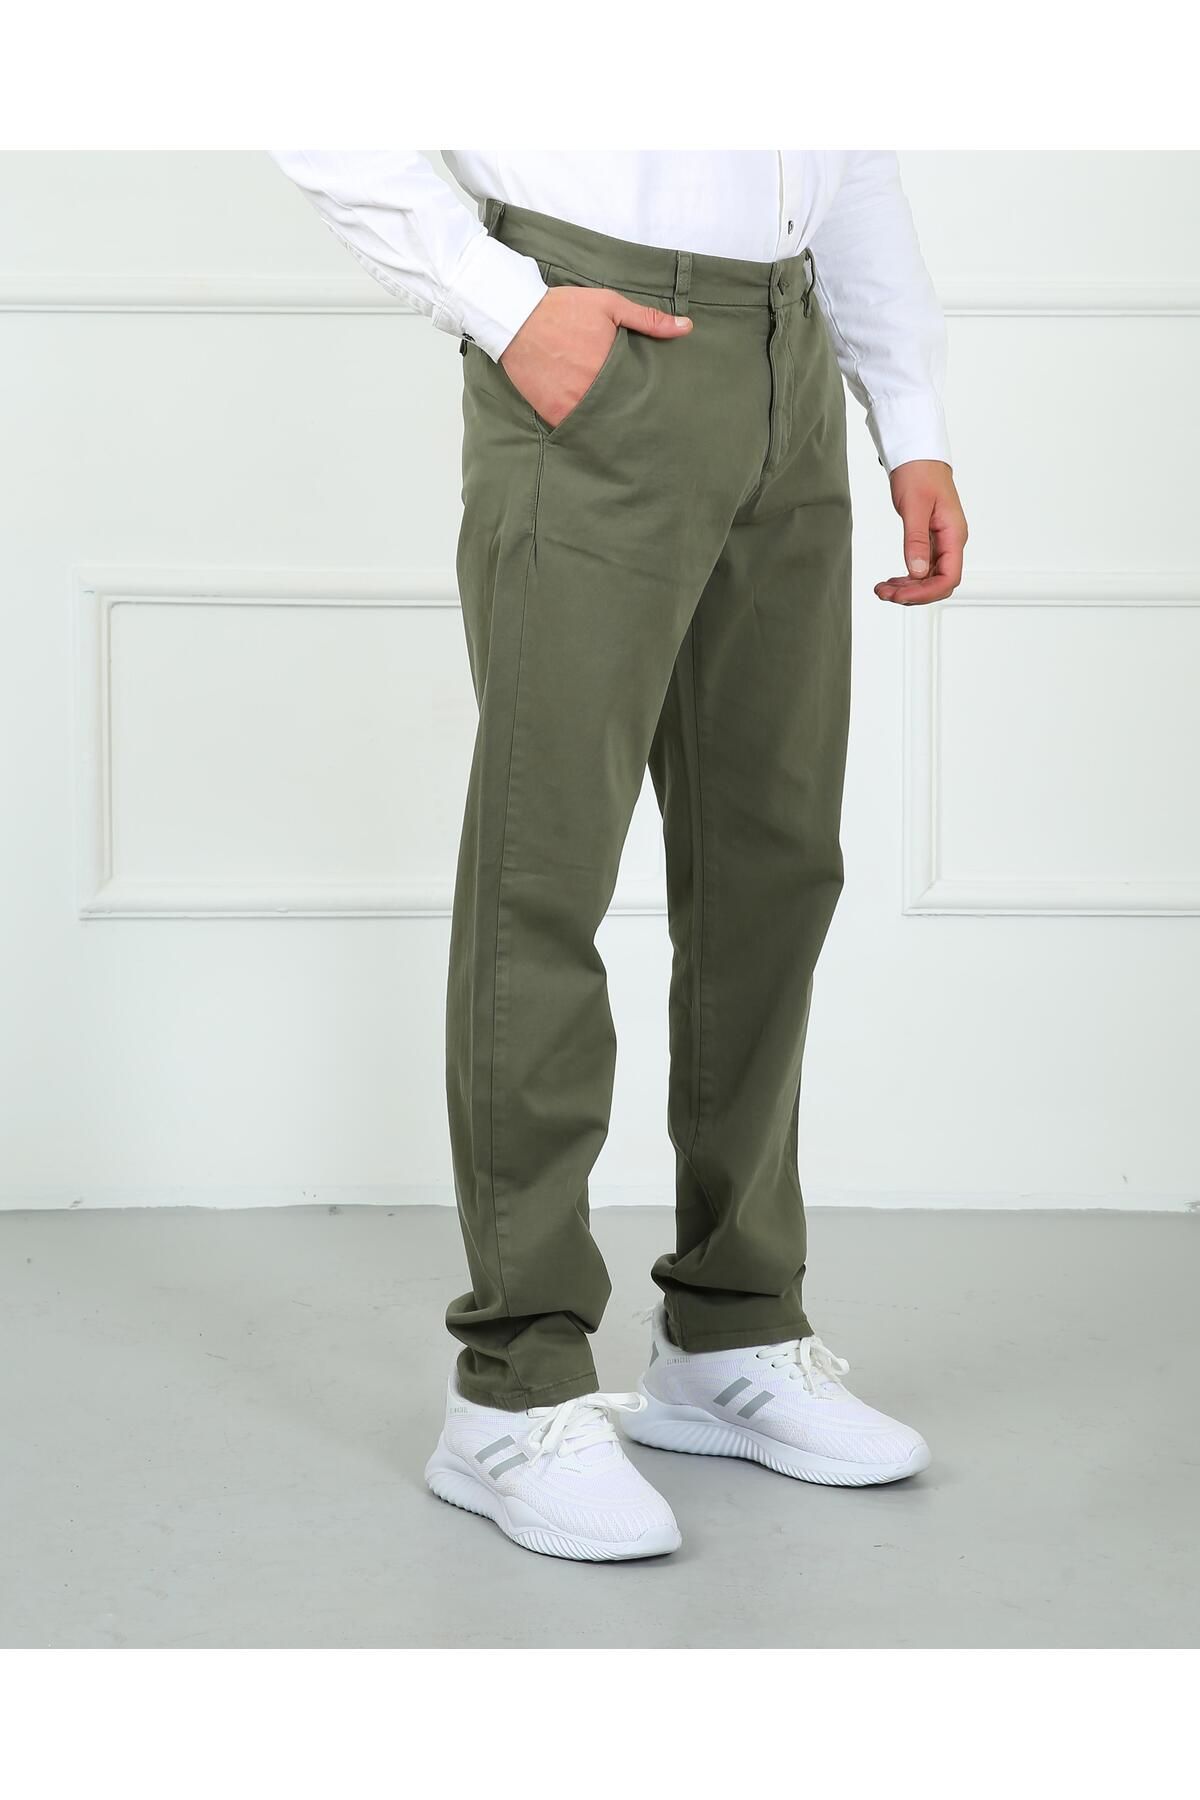 Twister Jeans Erkek Pantolon Walker 720-01 Khaki